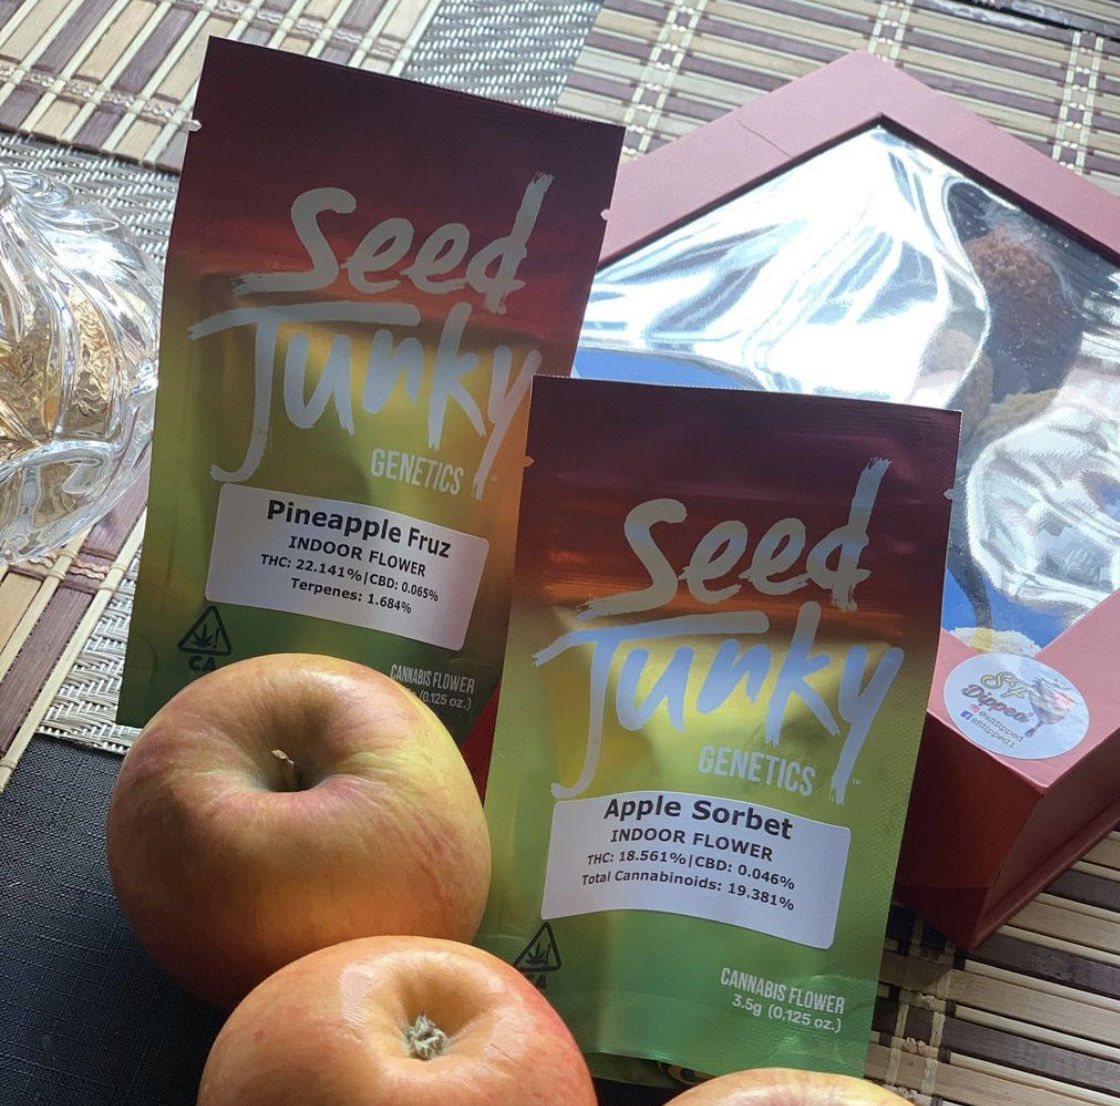 Pre-packaged Seed Junky cannabis flower